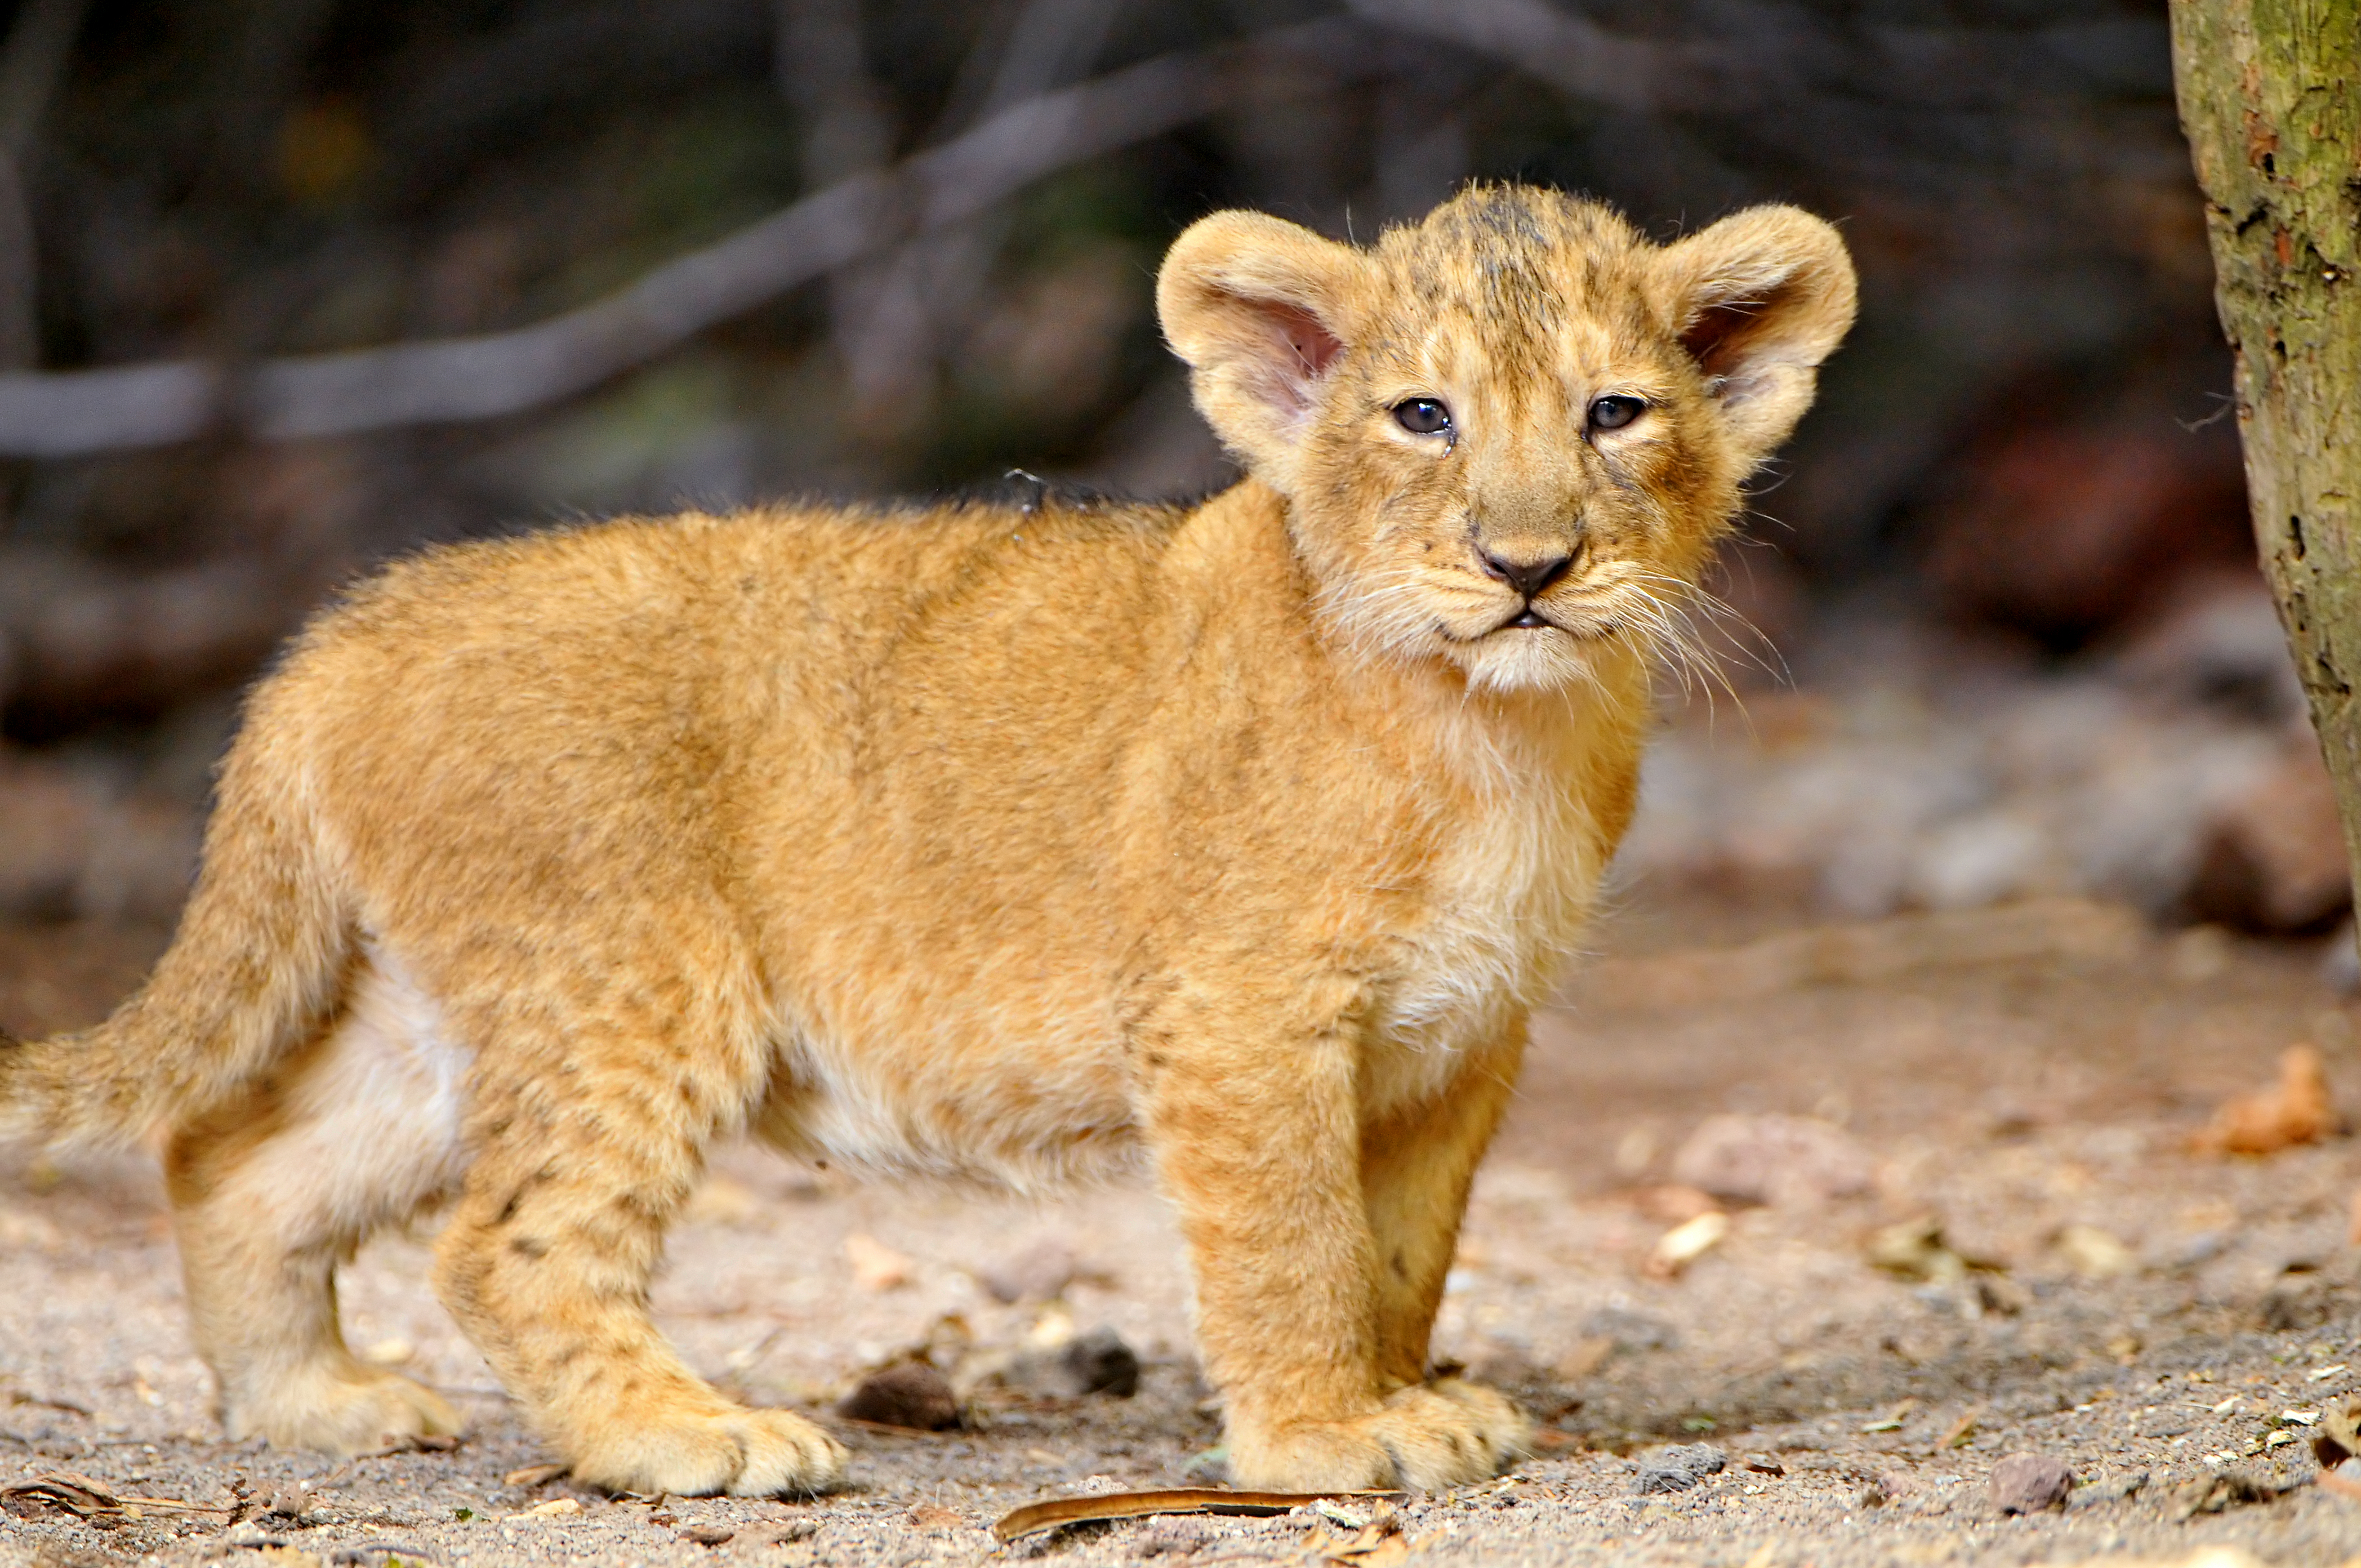 That's a cute little lion cub! | Lion cub, Lions and Animal